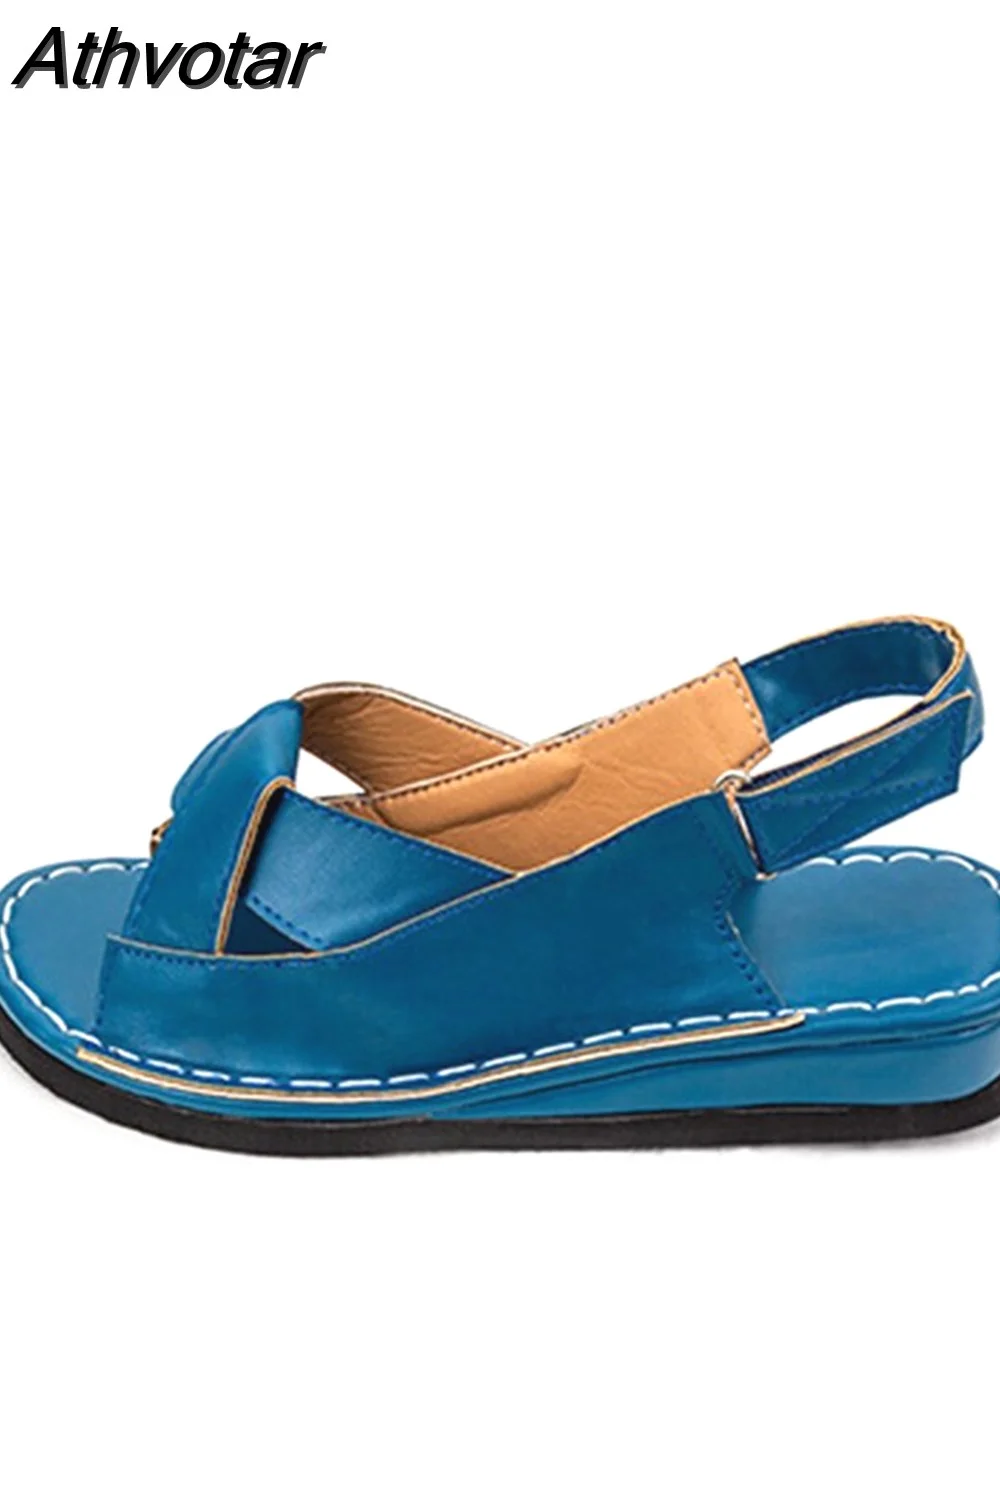 Athvotar Sandals Summer Female Shoes Women's Peep Toe Wedge Woman Comfortable Plus Size Female Platform Ladies New 2023 430-1